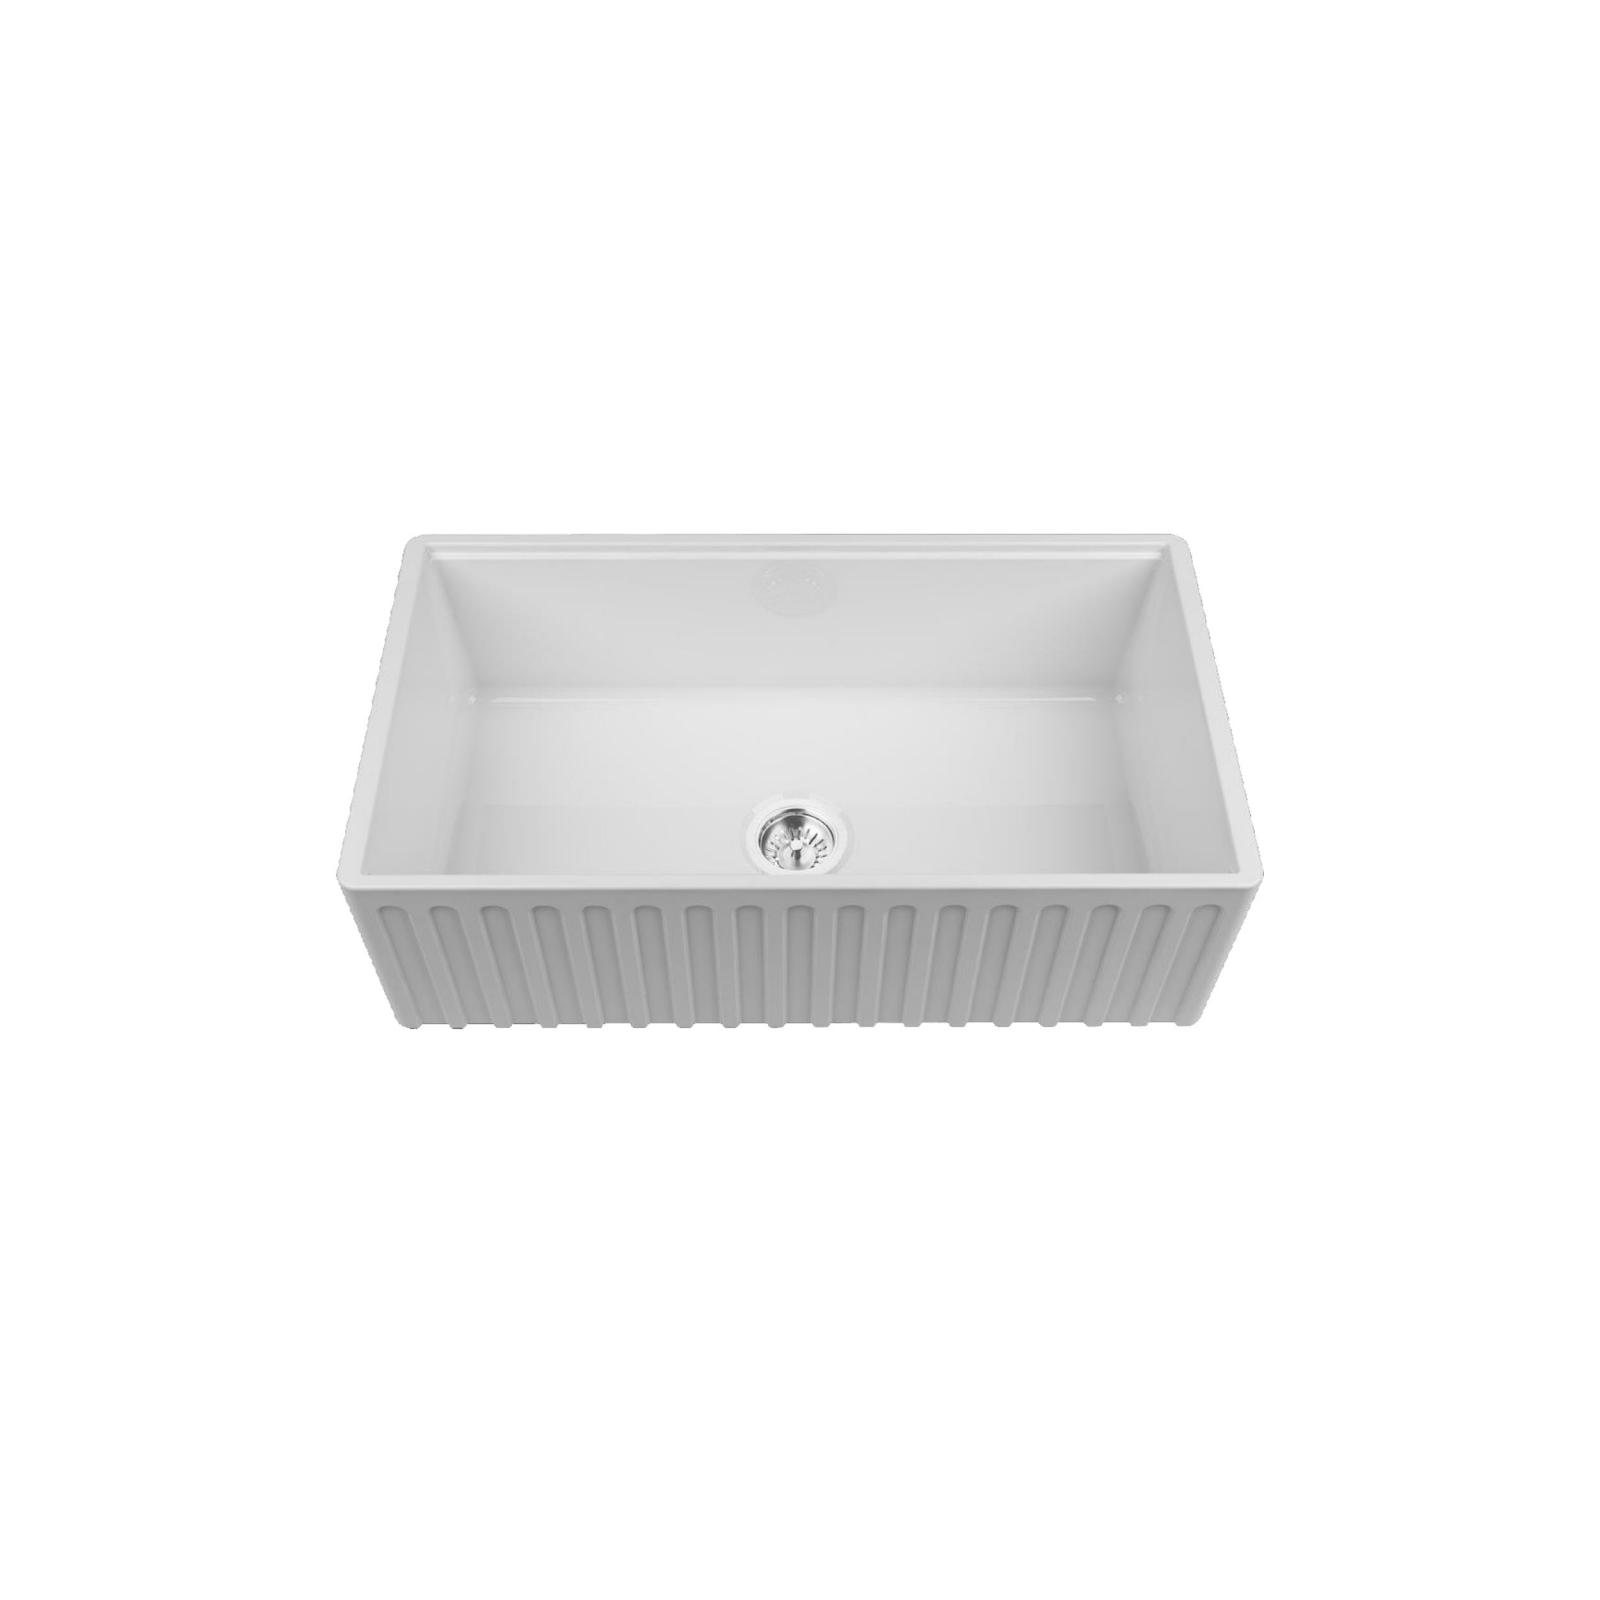 High-quality sink Louis Le Grand III - single bowl, ceramic